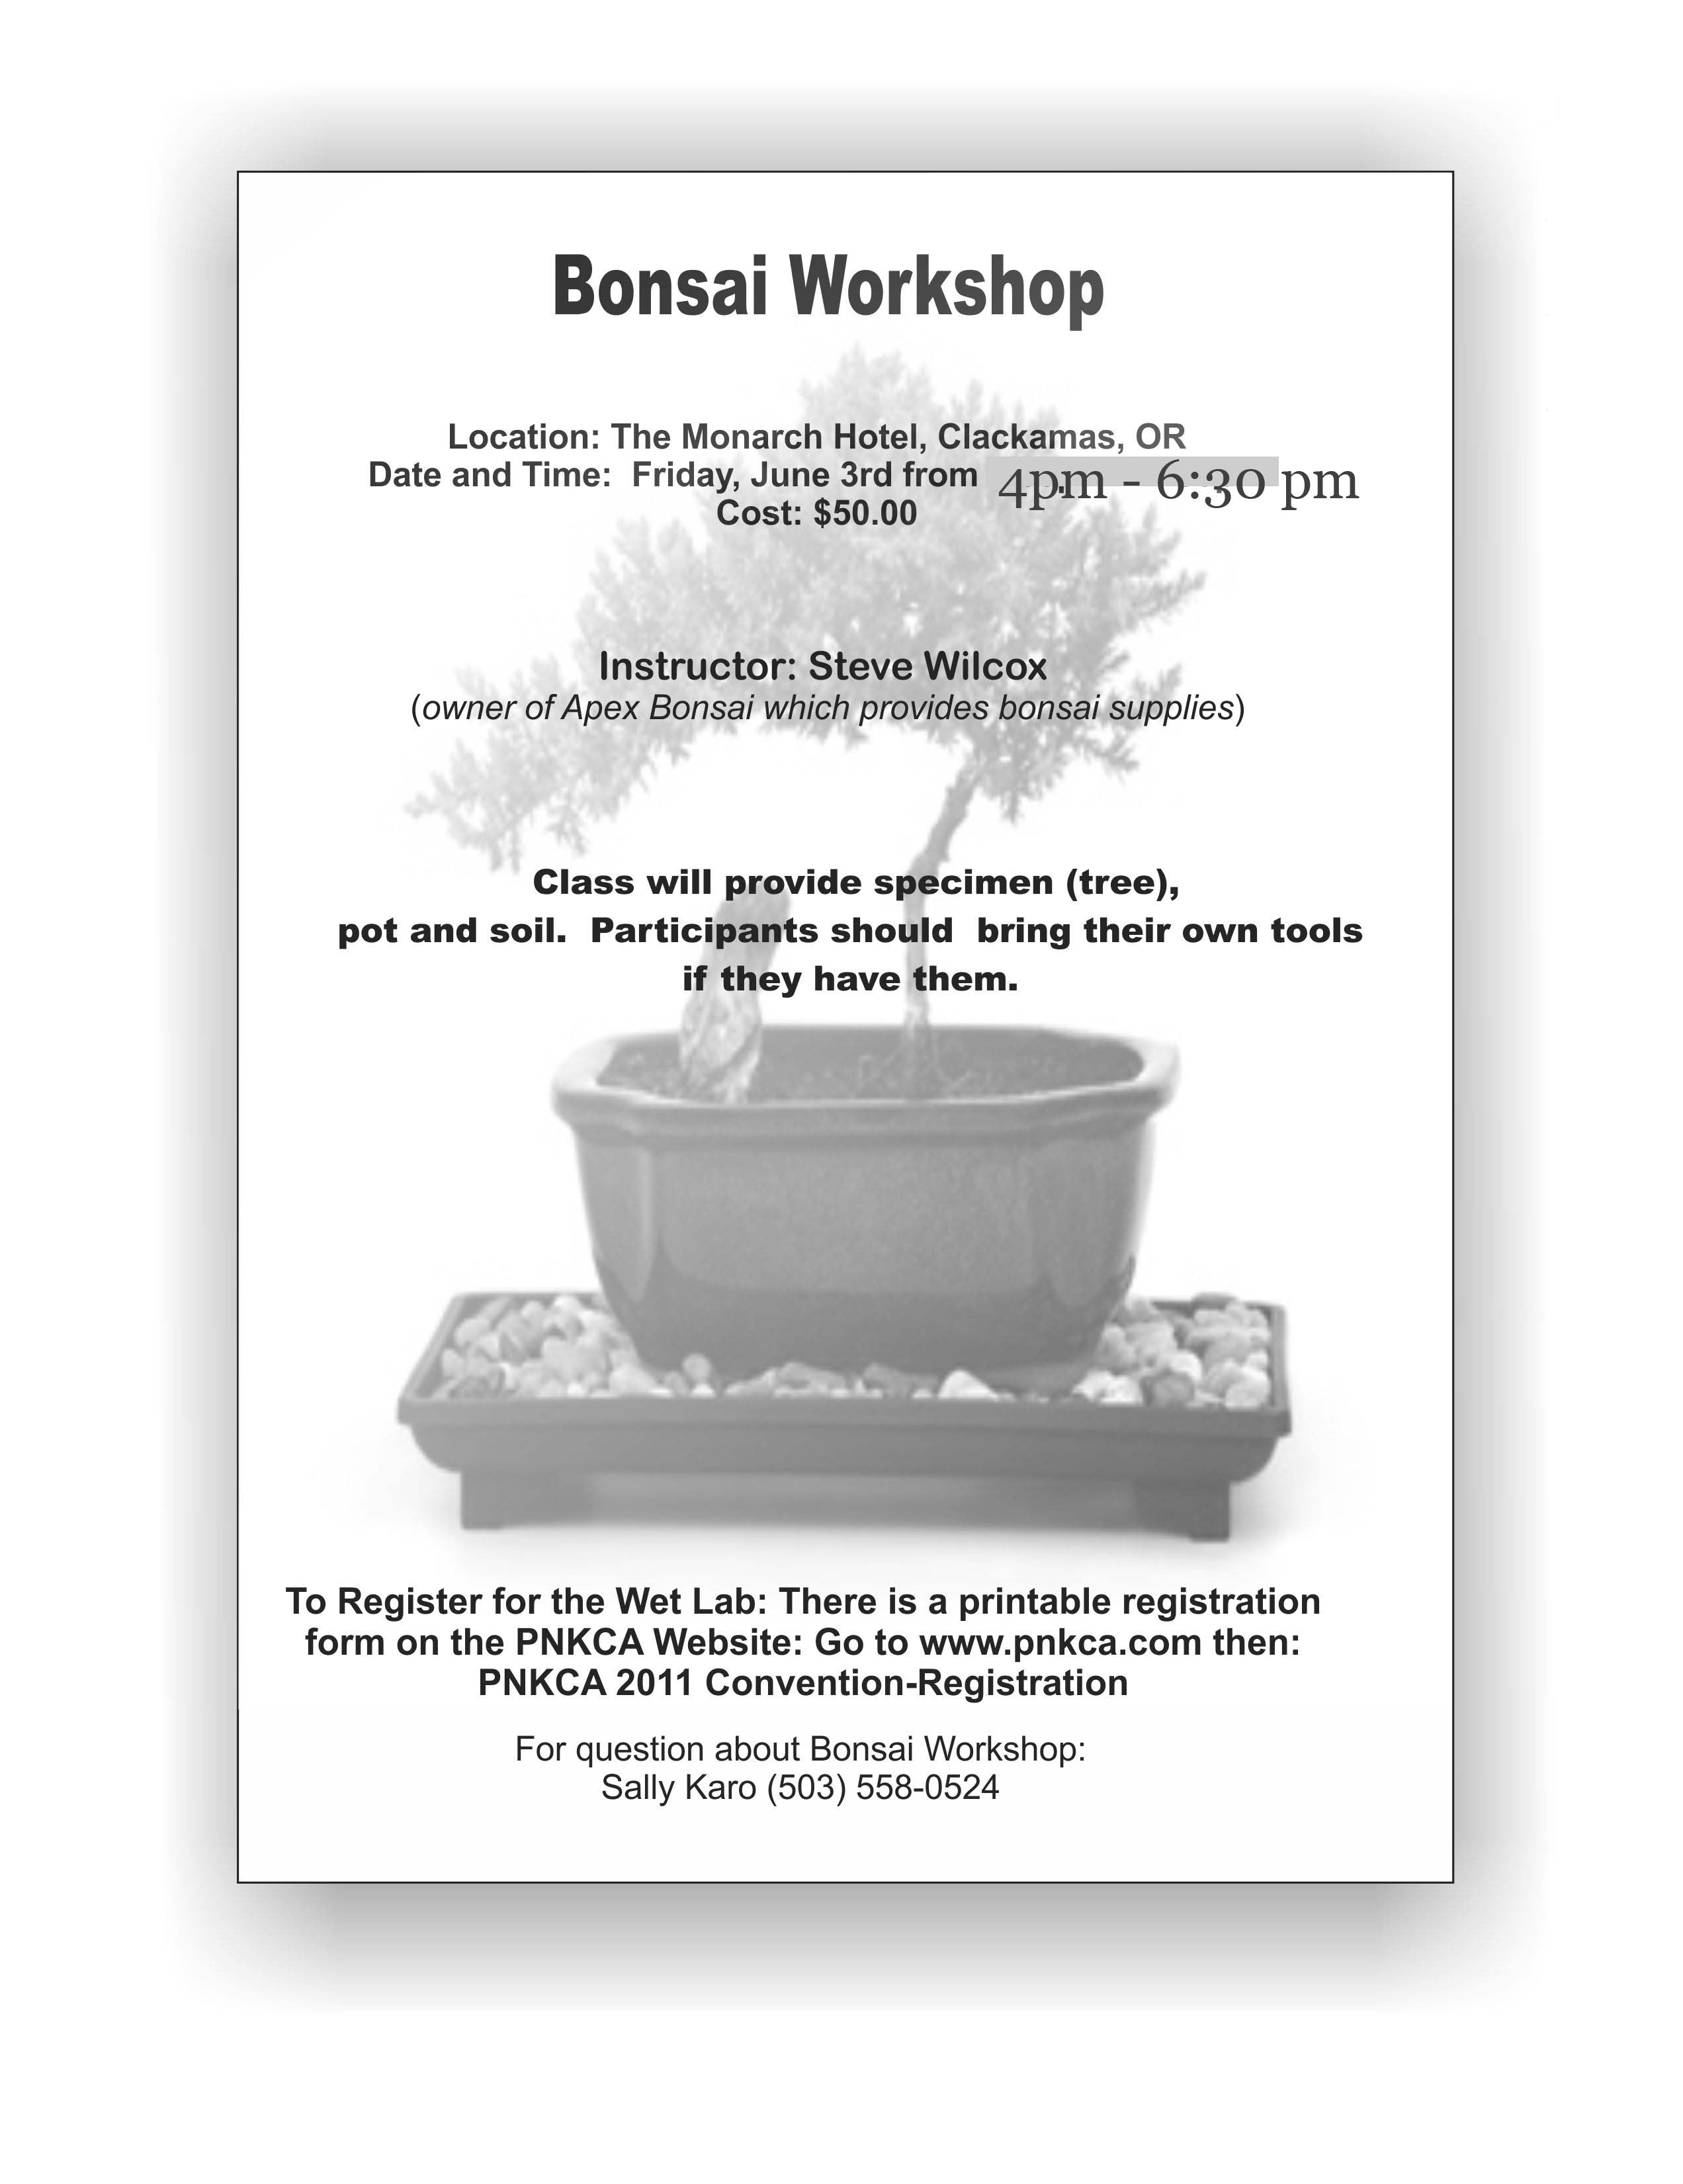 bonsai_workshop2new.jpg